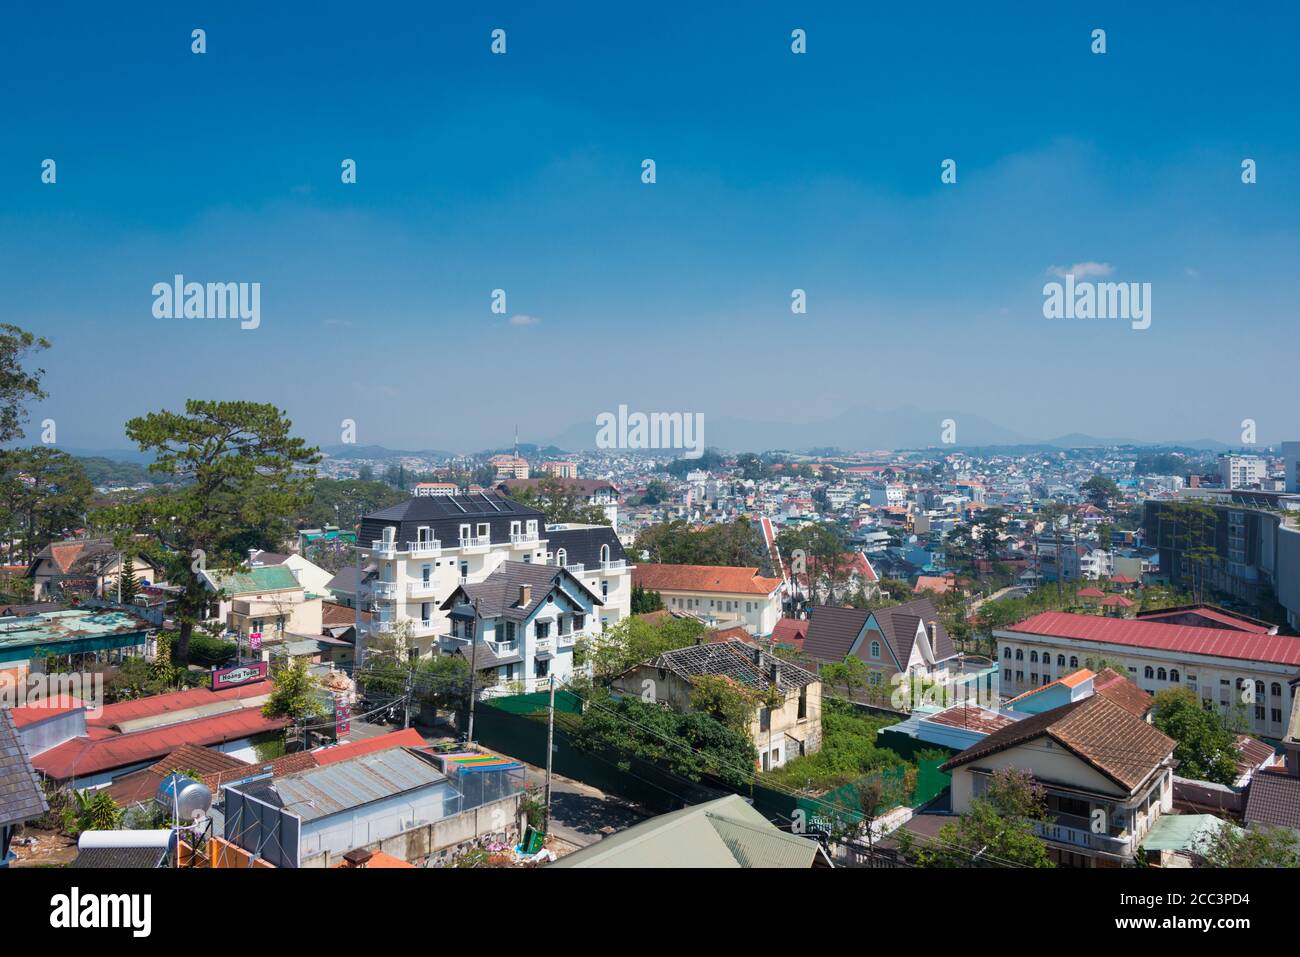 Dalat, Vietnam - Dalat City view from Crazy House. a famous tourist spot in Dalat, Vietnam. Stock Photo